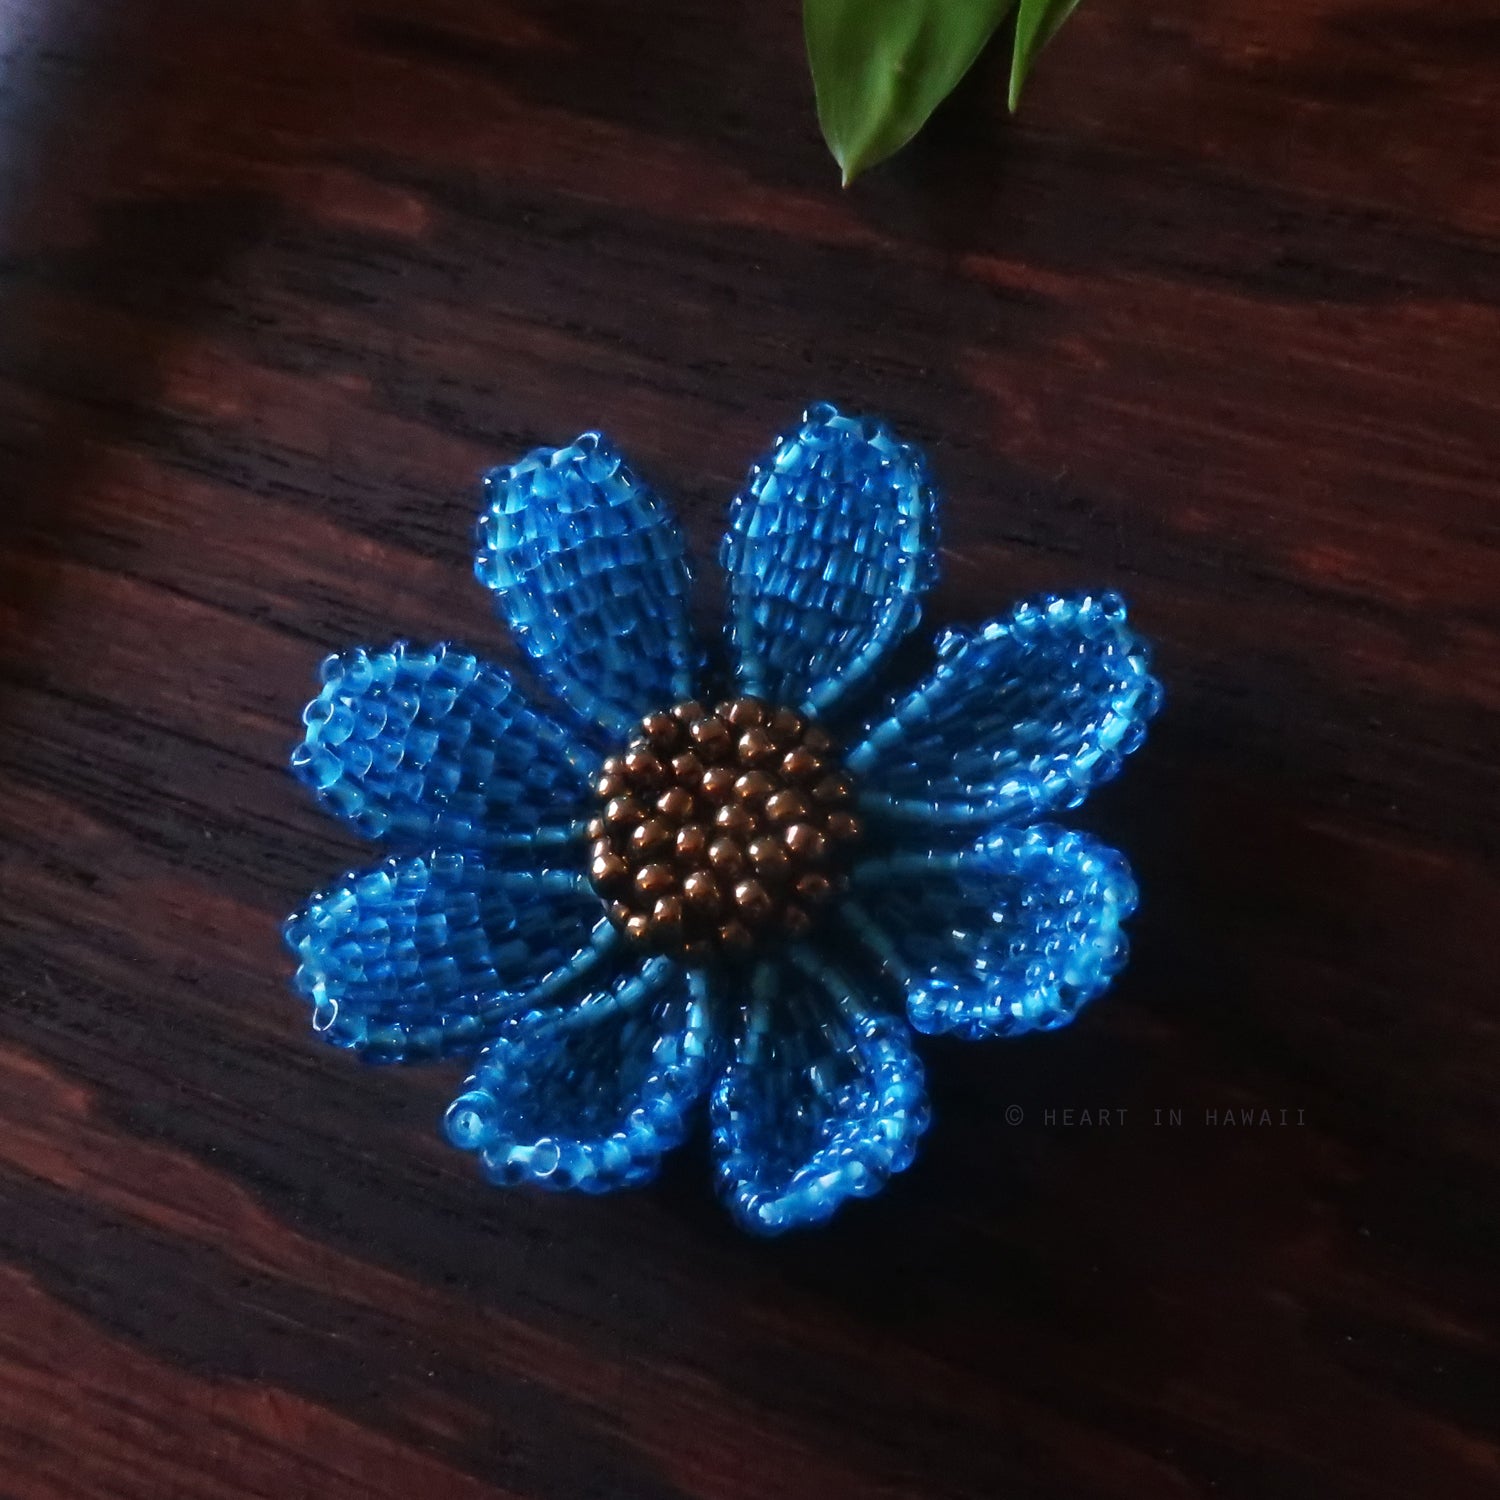 Heart in Hawaii Beaded Cosmos Flower Brooch - Sky Blue